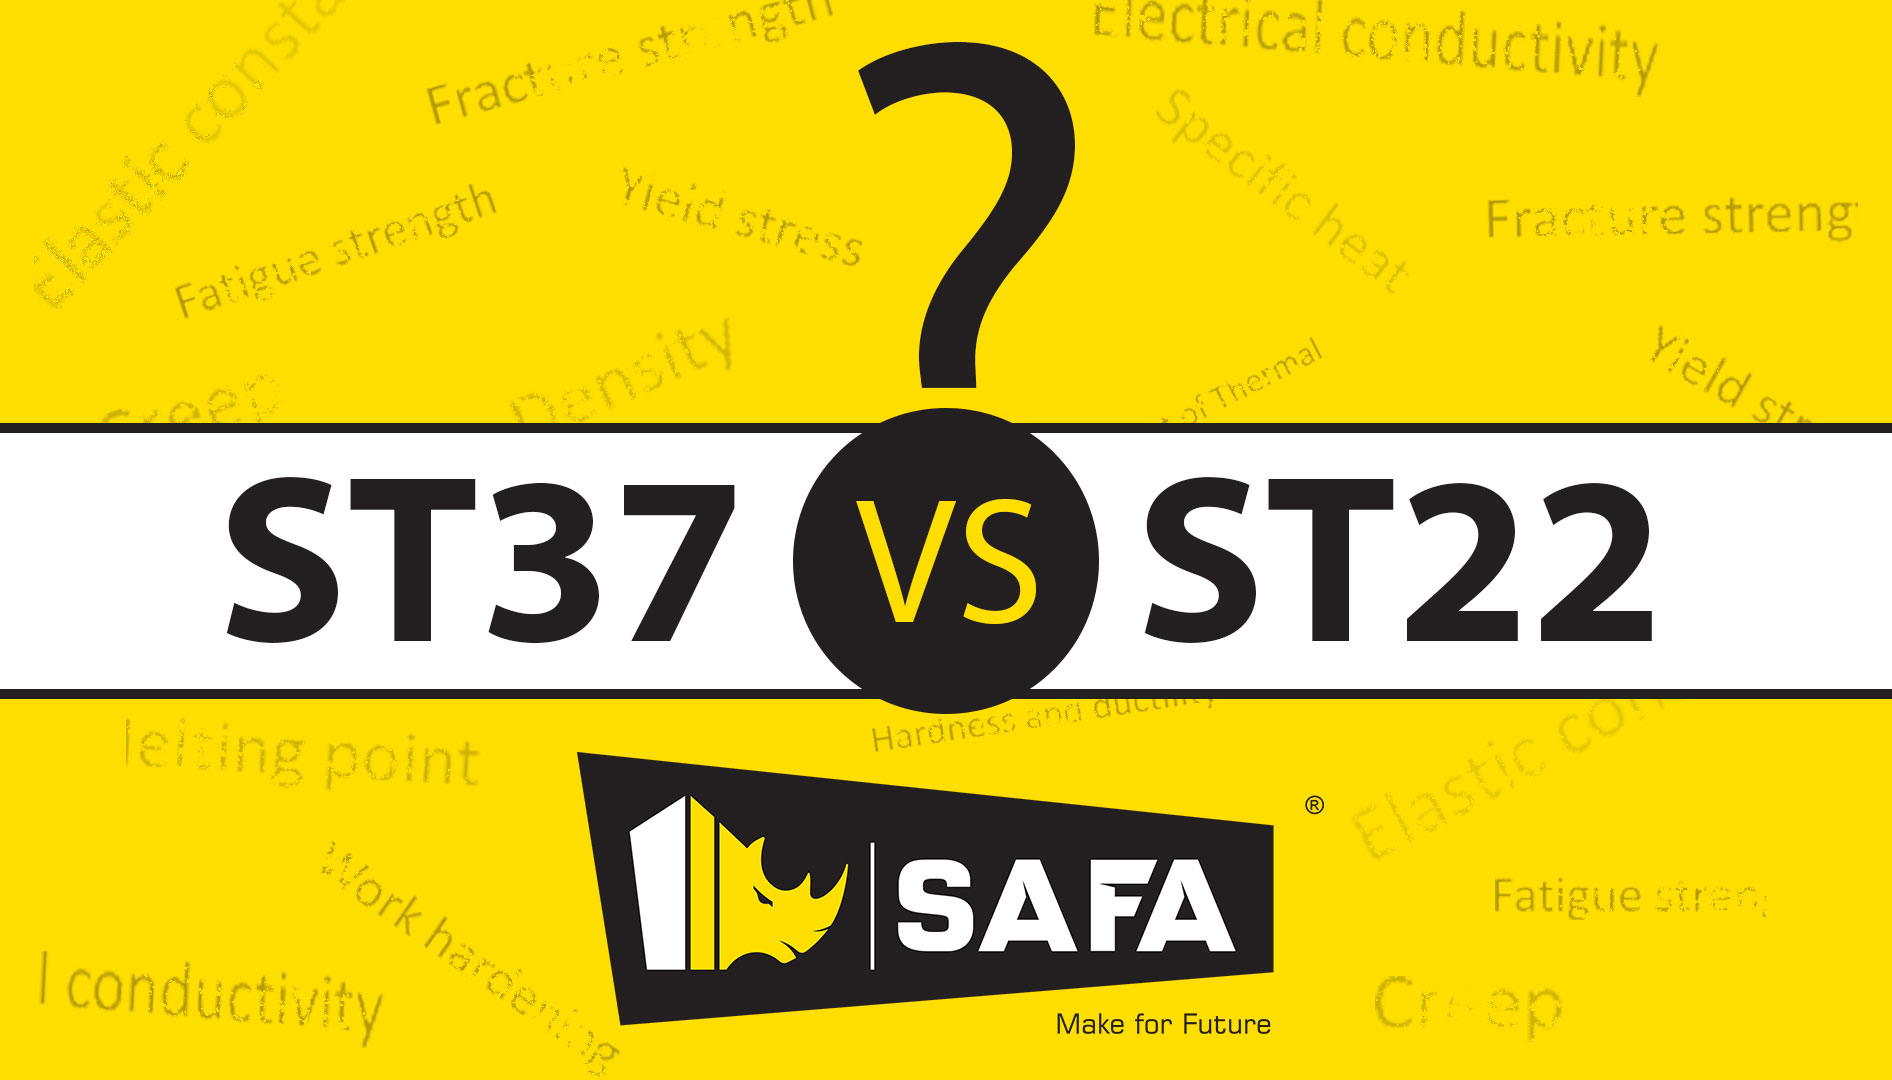 مزایا و برتری فولاد st37 نسبت به فولاد st22